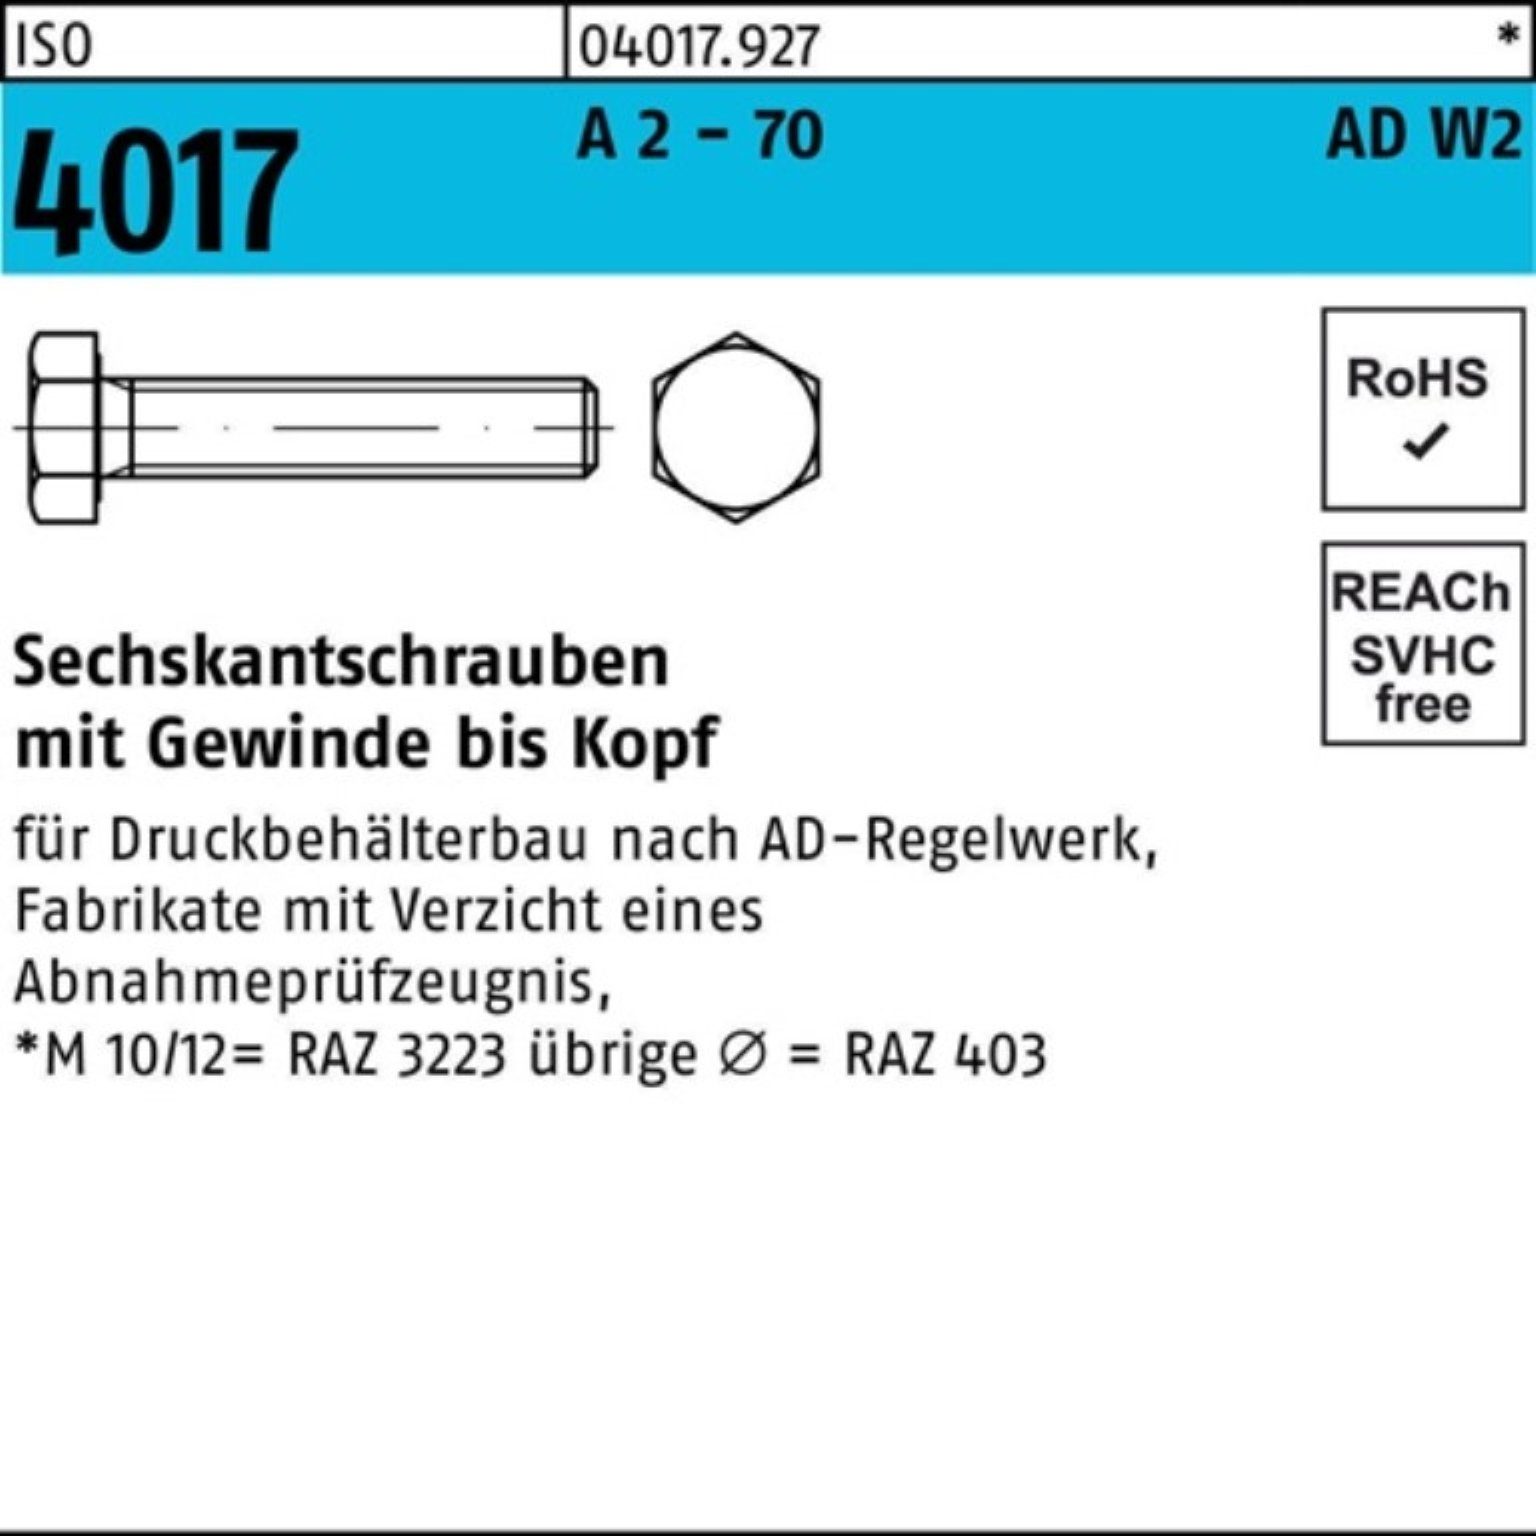 Bufab Sechskantschraube 100er Pack Sechskantschraube ISO 4017 VG M12x 25 A 2 - 70 AD-W2 50 St